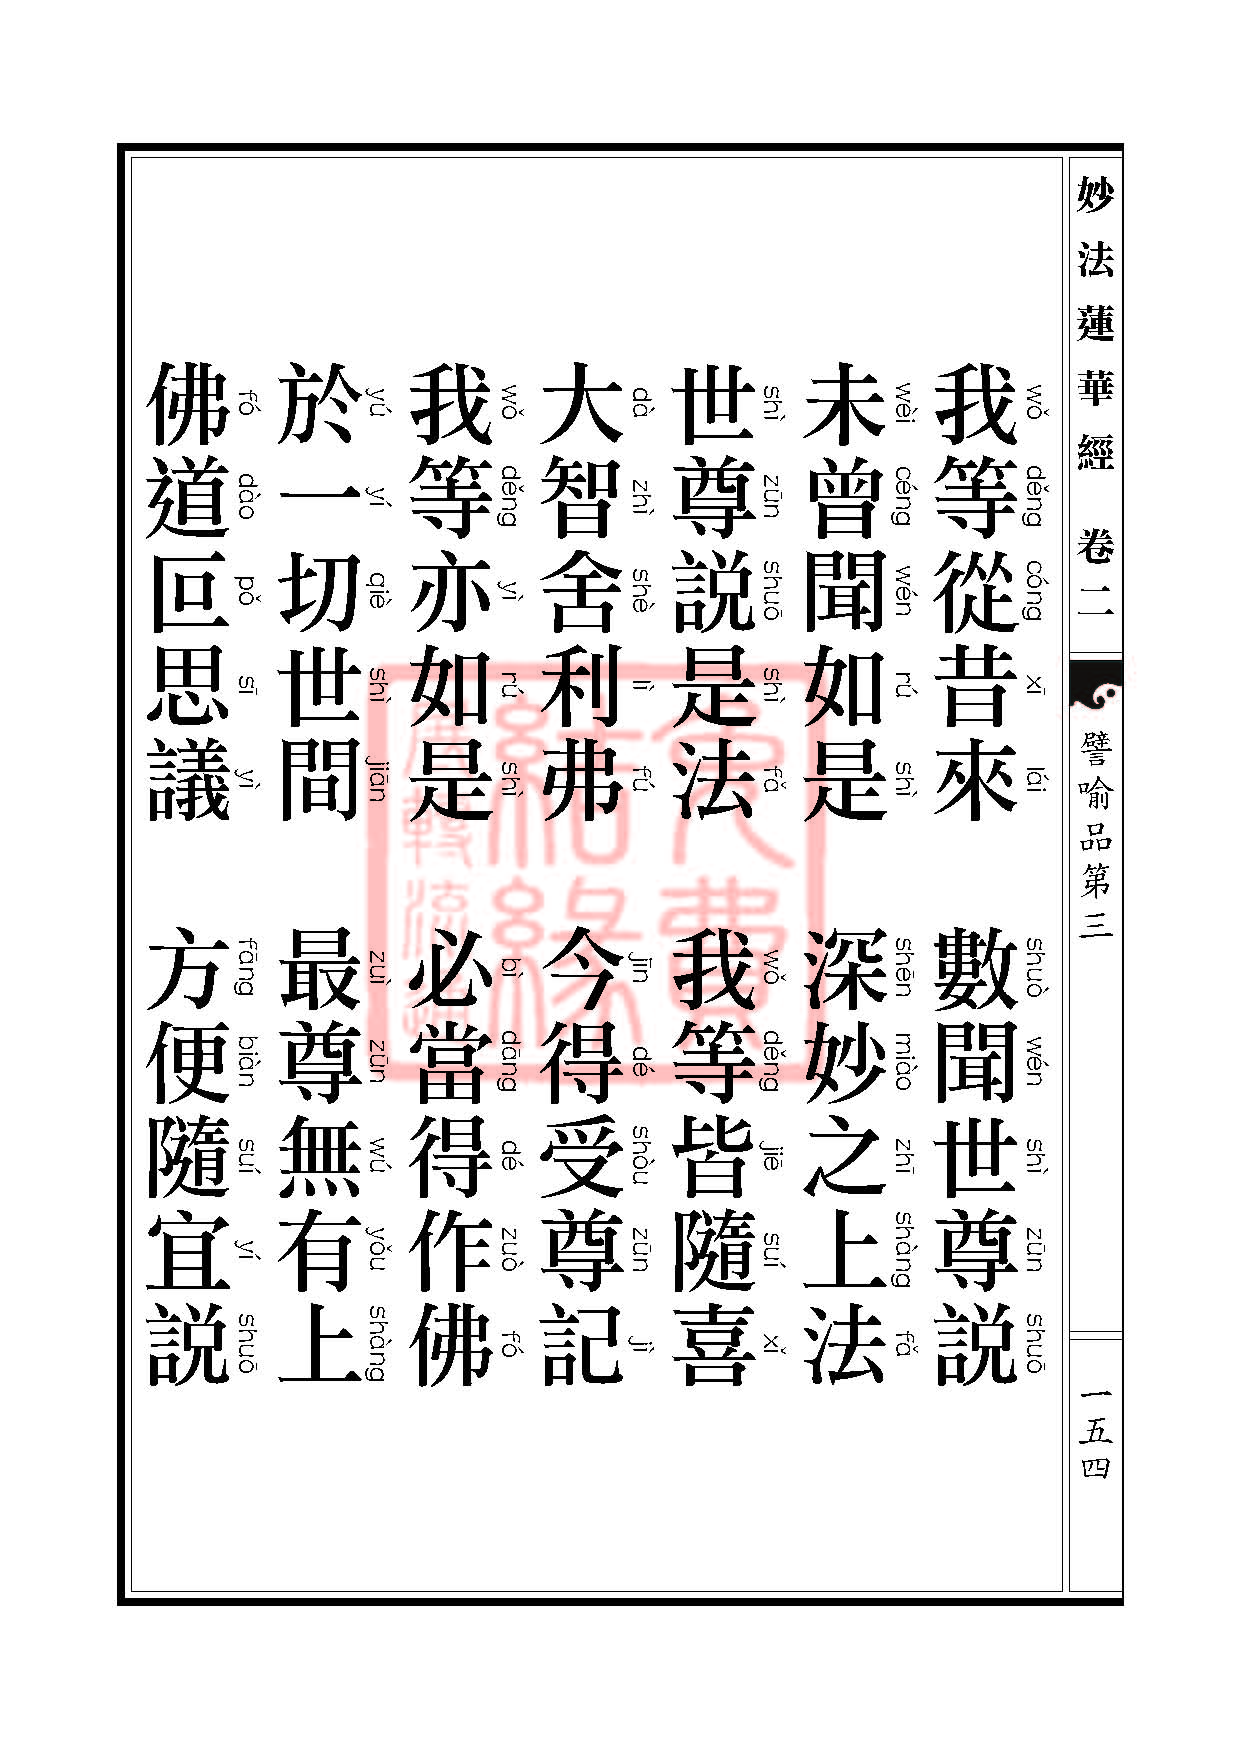 Book_FHJ_HK-A6-PY_Web_ҳ_154.jpg